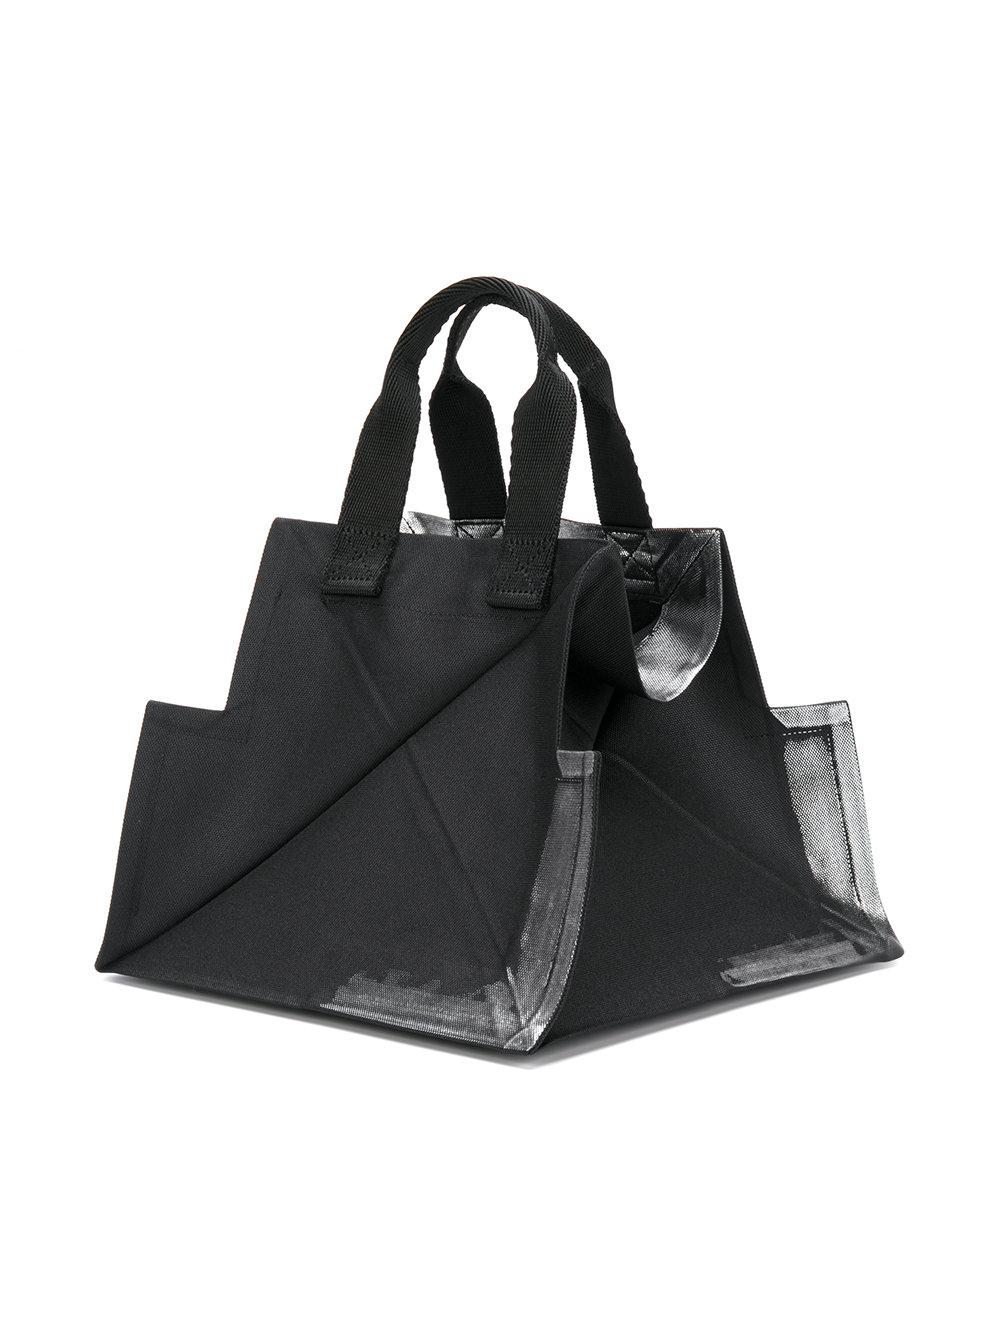 Lyst - 132 5. Issey Miyake Structured Clutch Bag in Black